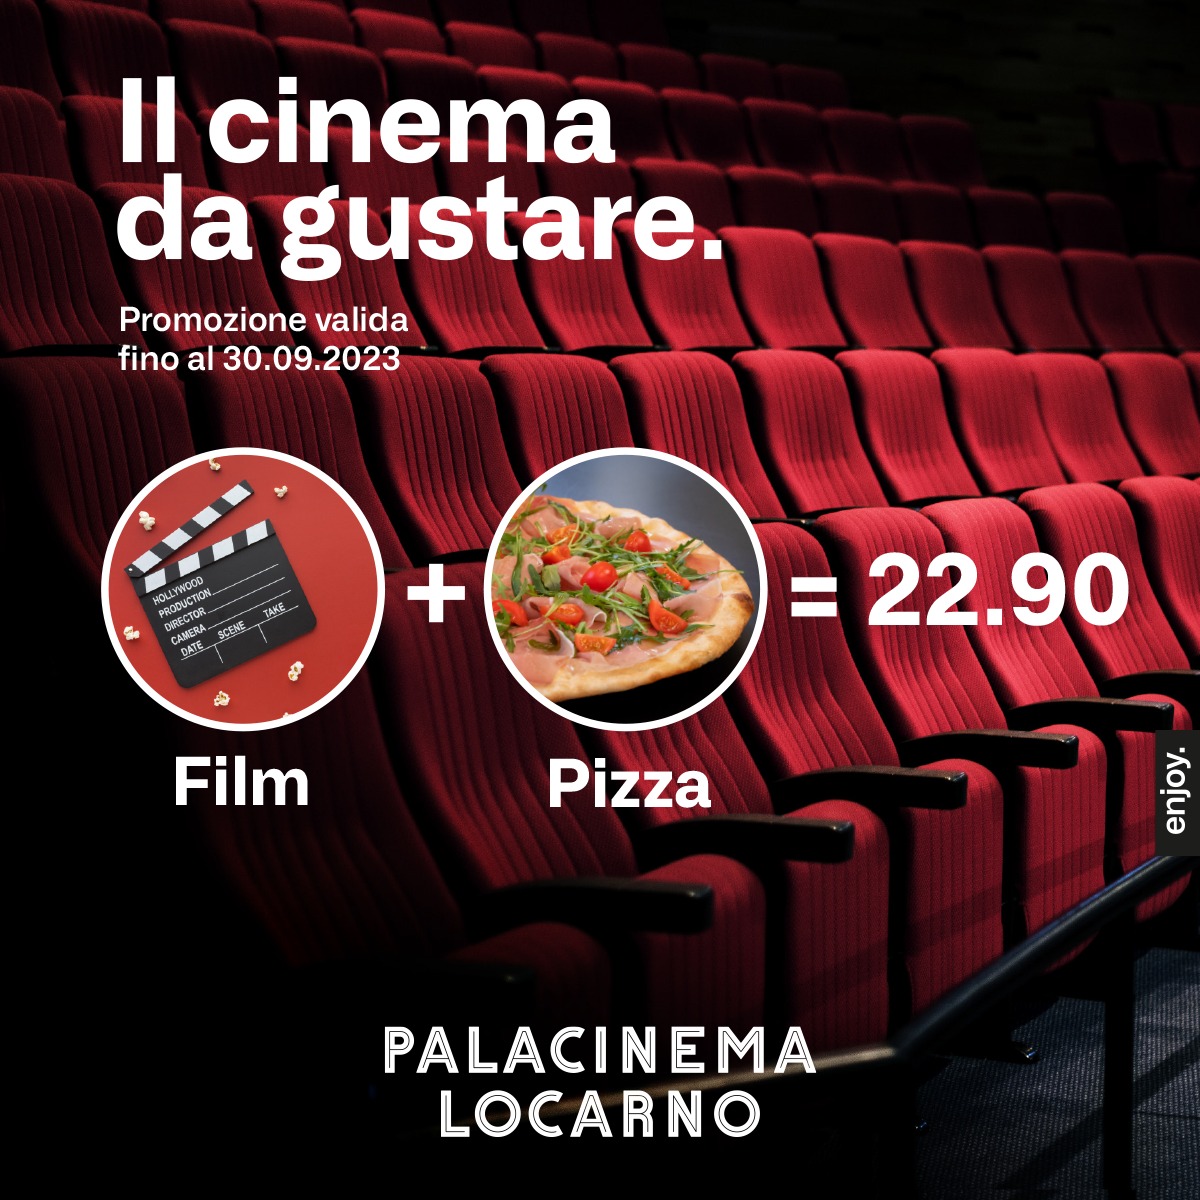 film + pizza = 22.90